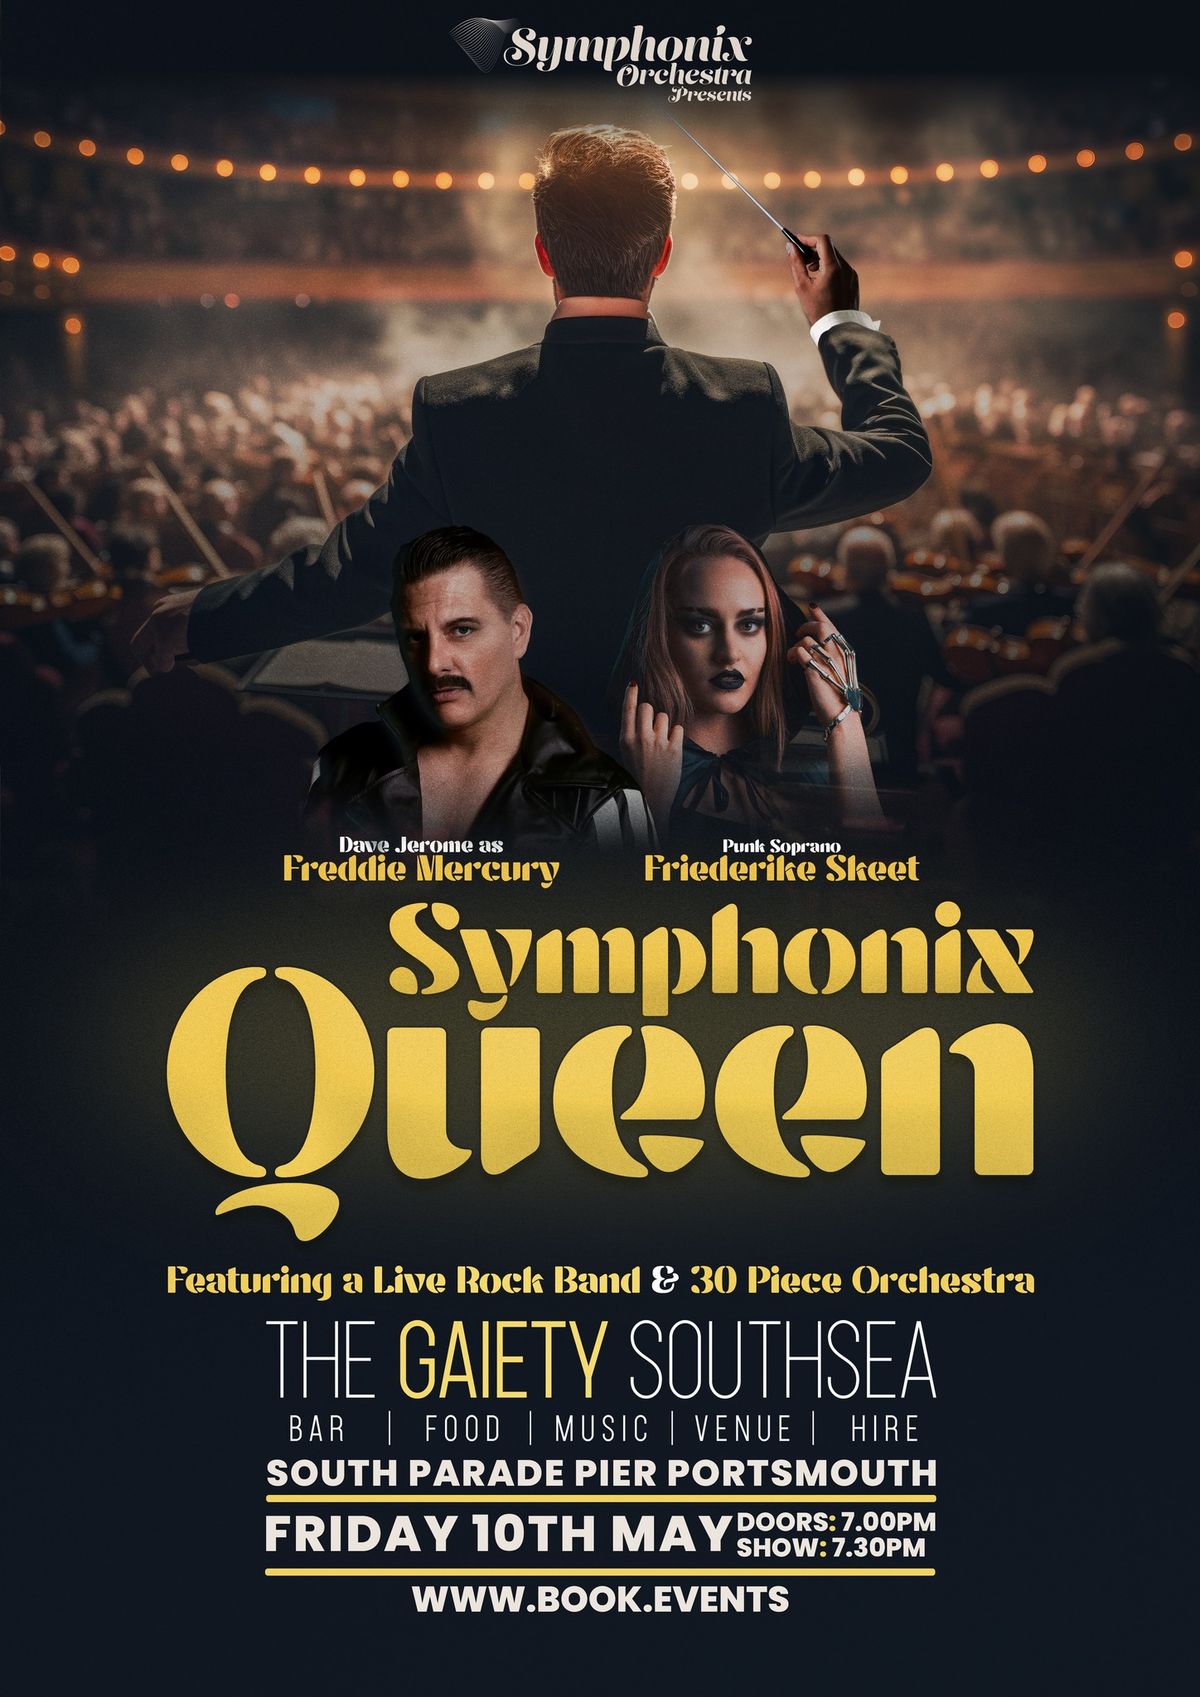 Symphonix Orchestra presents Symphonix Queen at The Gaiety, Southsea.